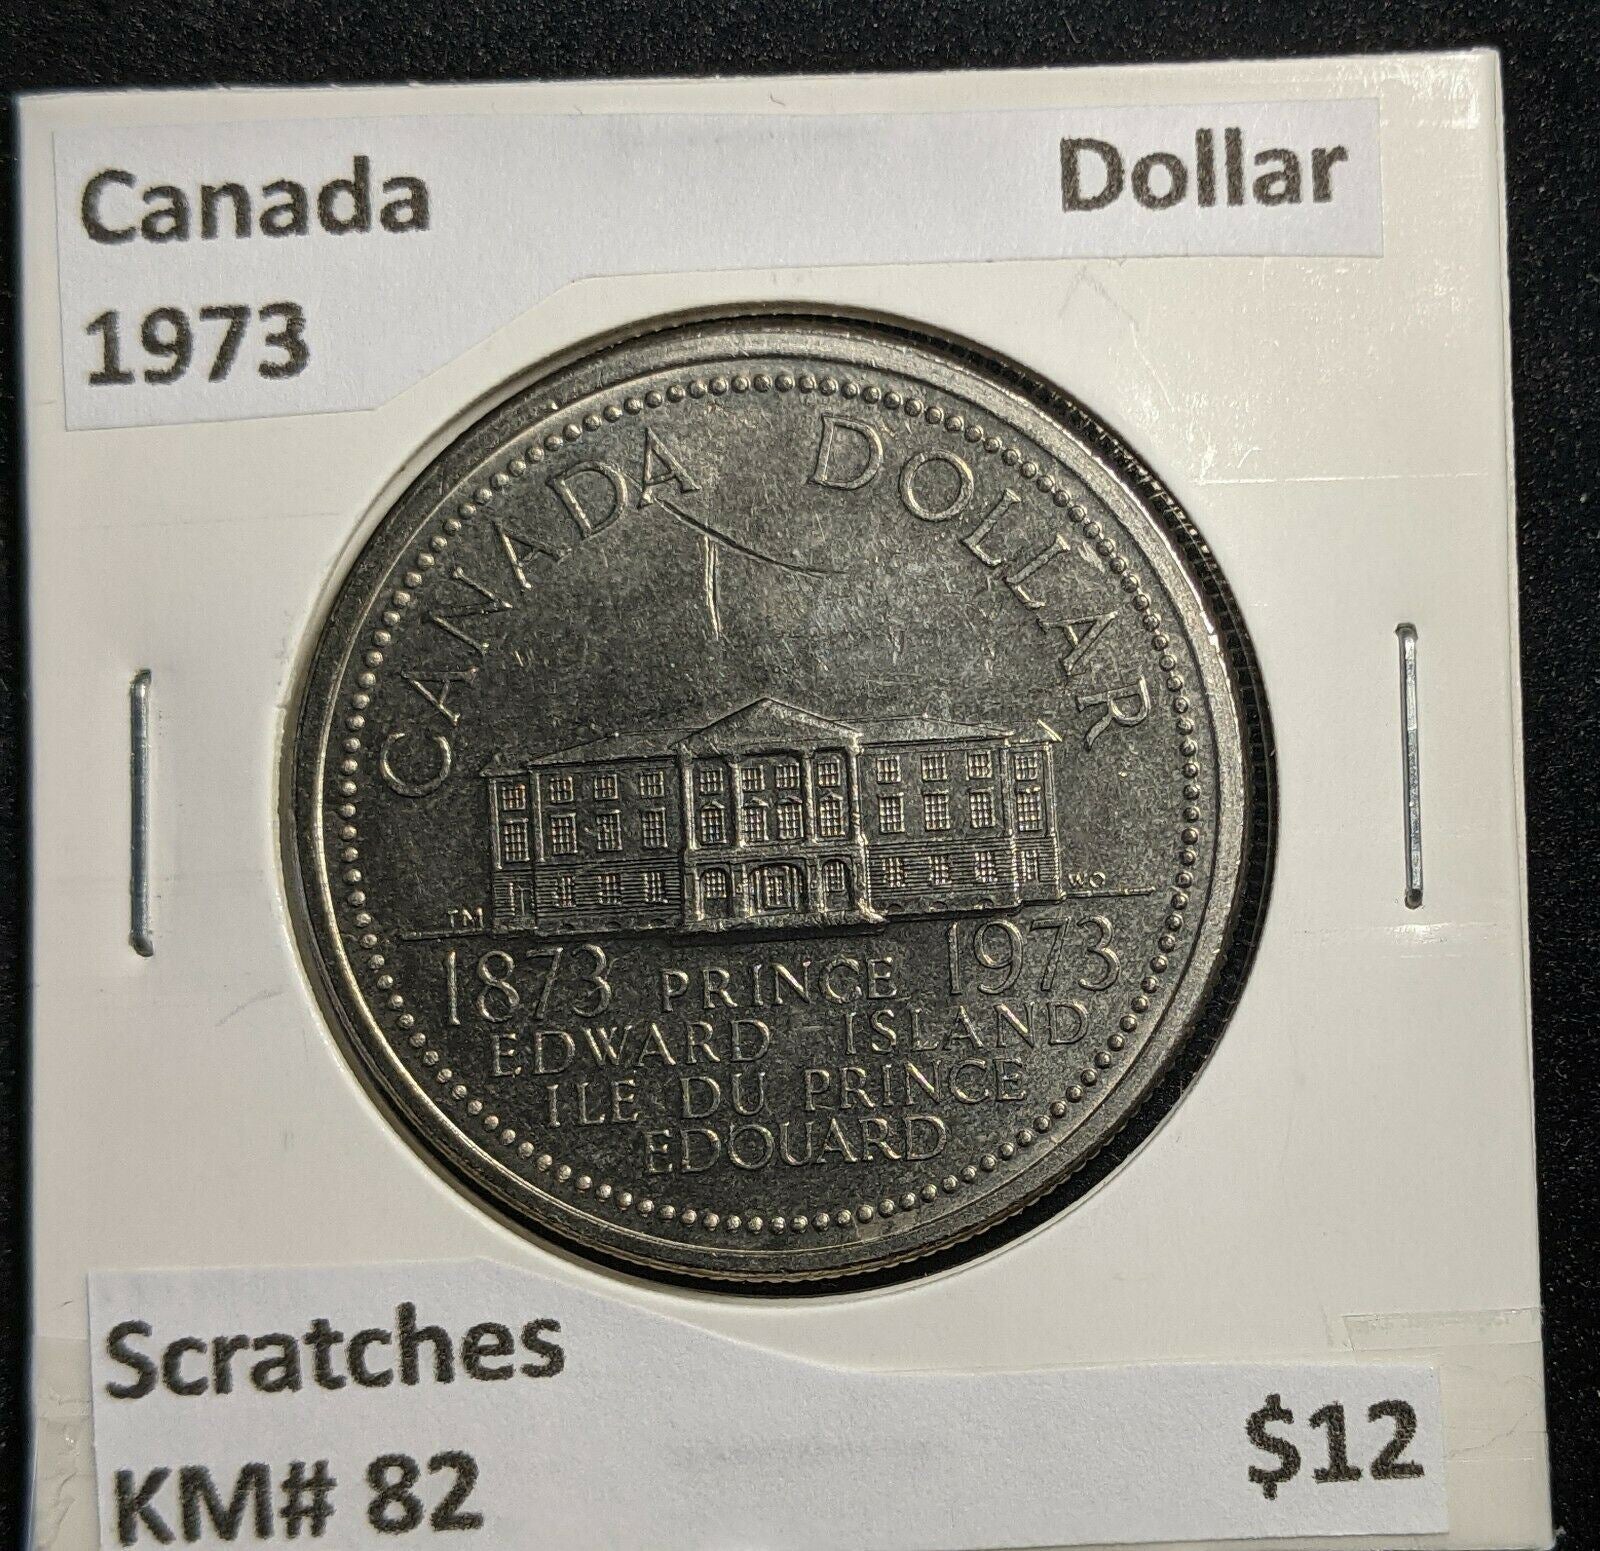 Canada 1973 Dollar KM# 82 Scratches #1132